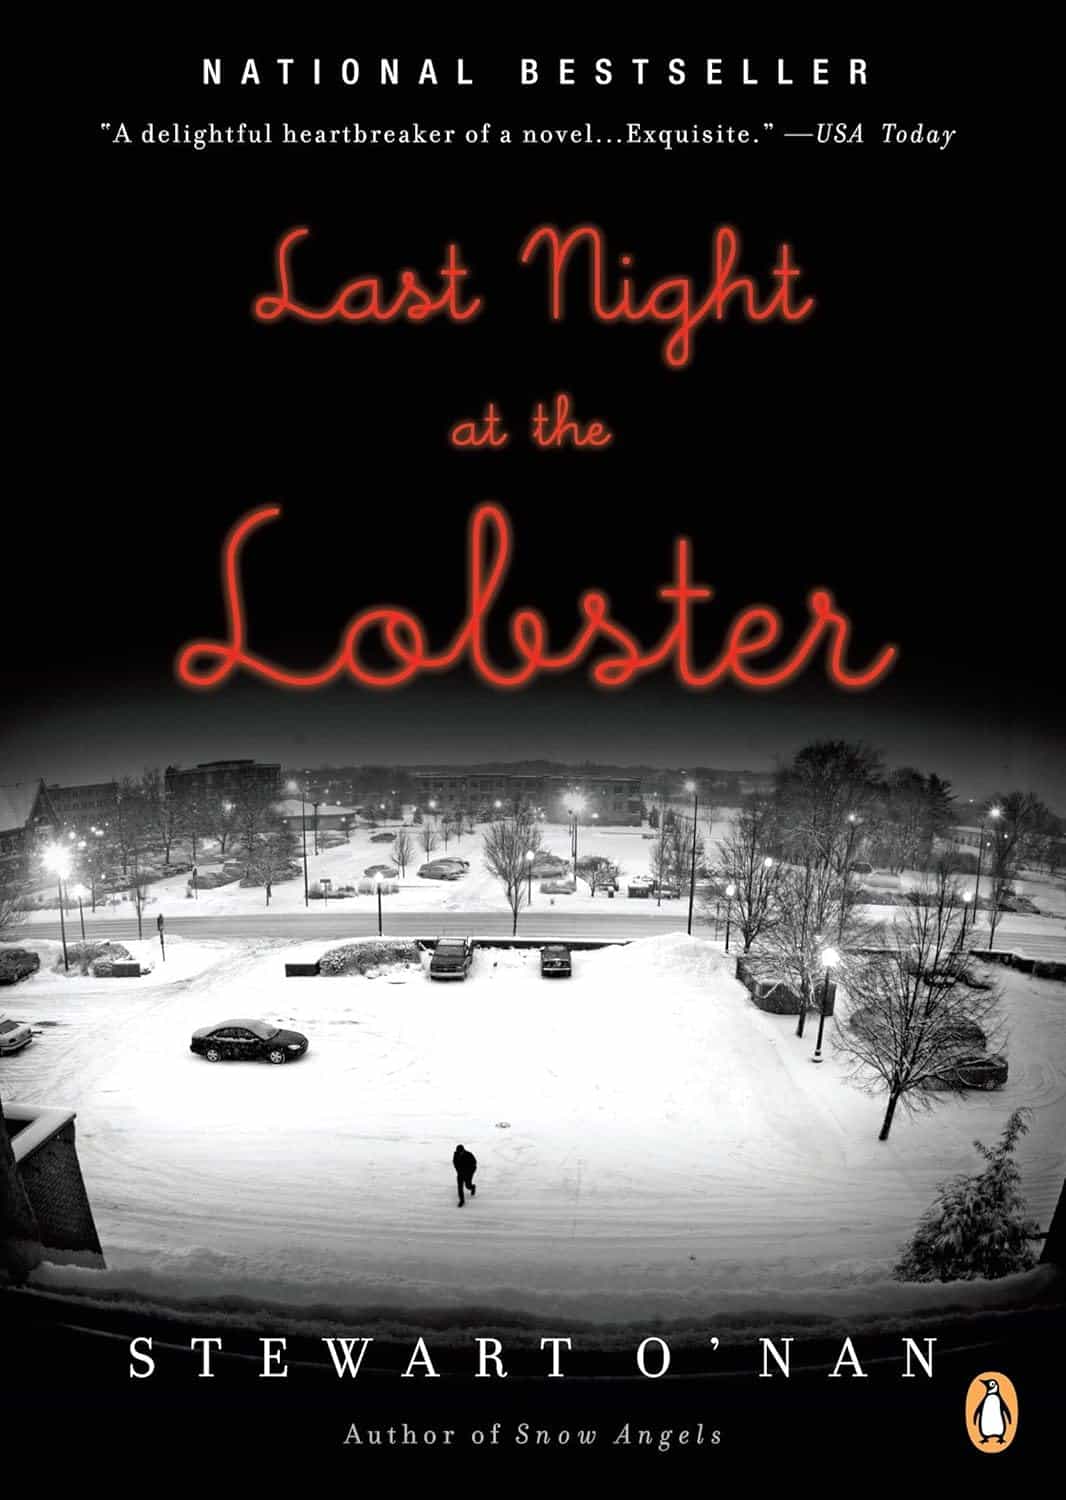 Last Night at the Lobster - By Stewart O'Nan